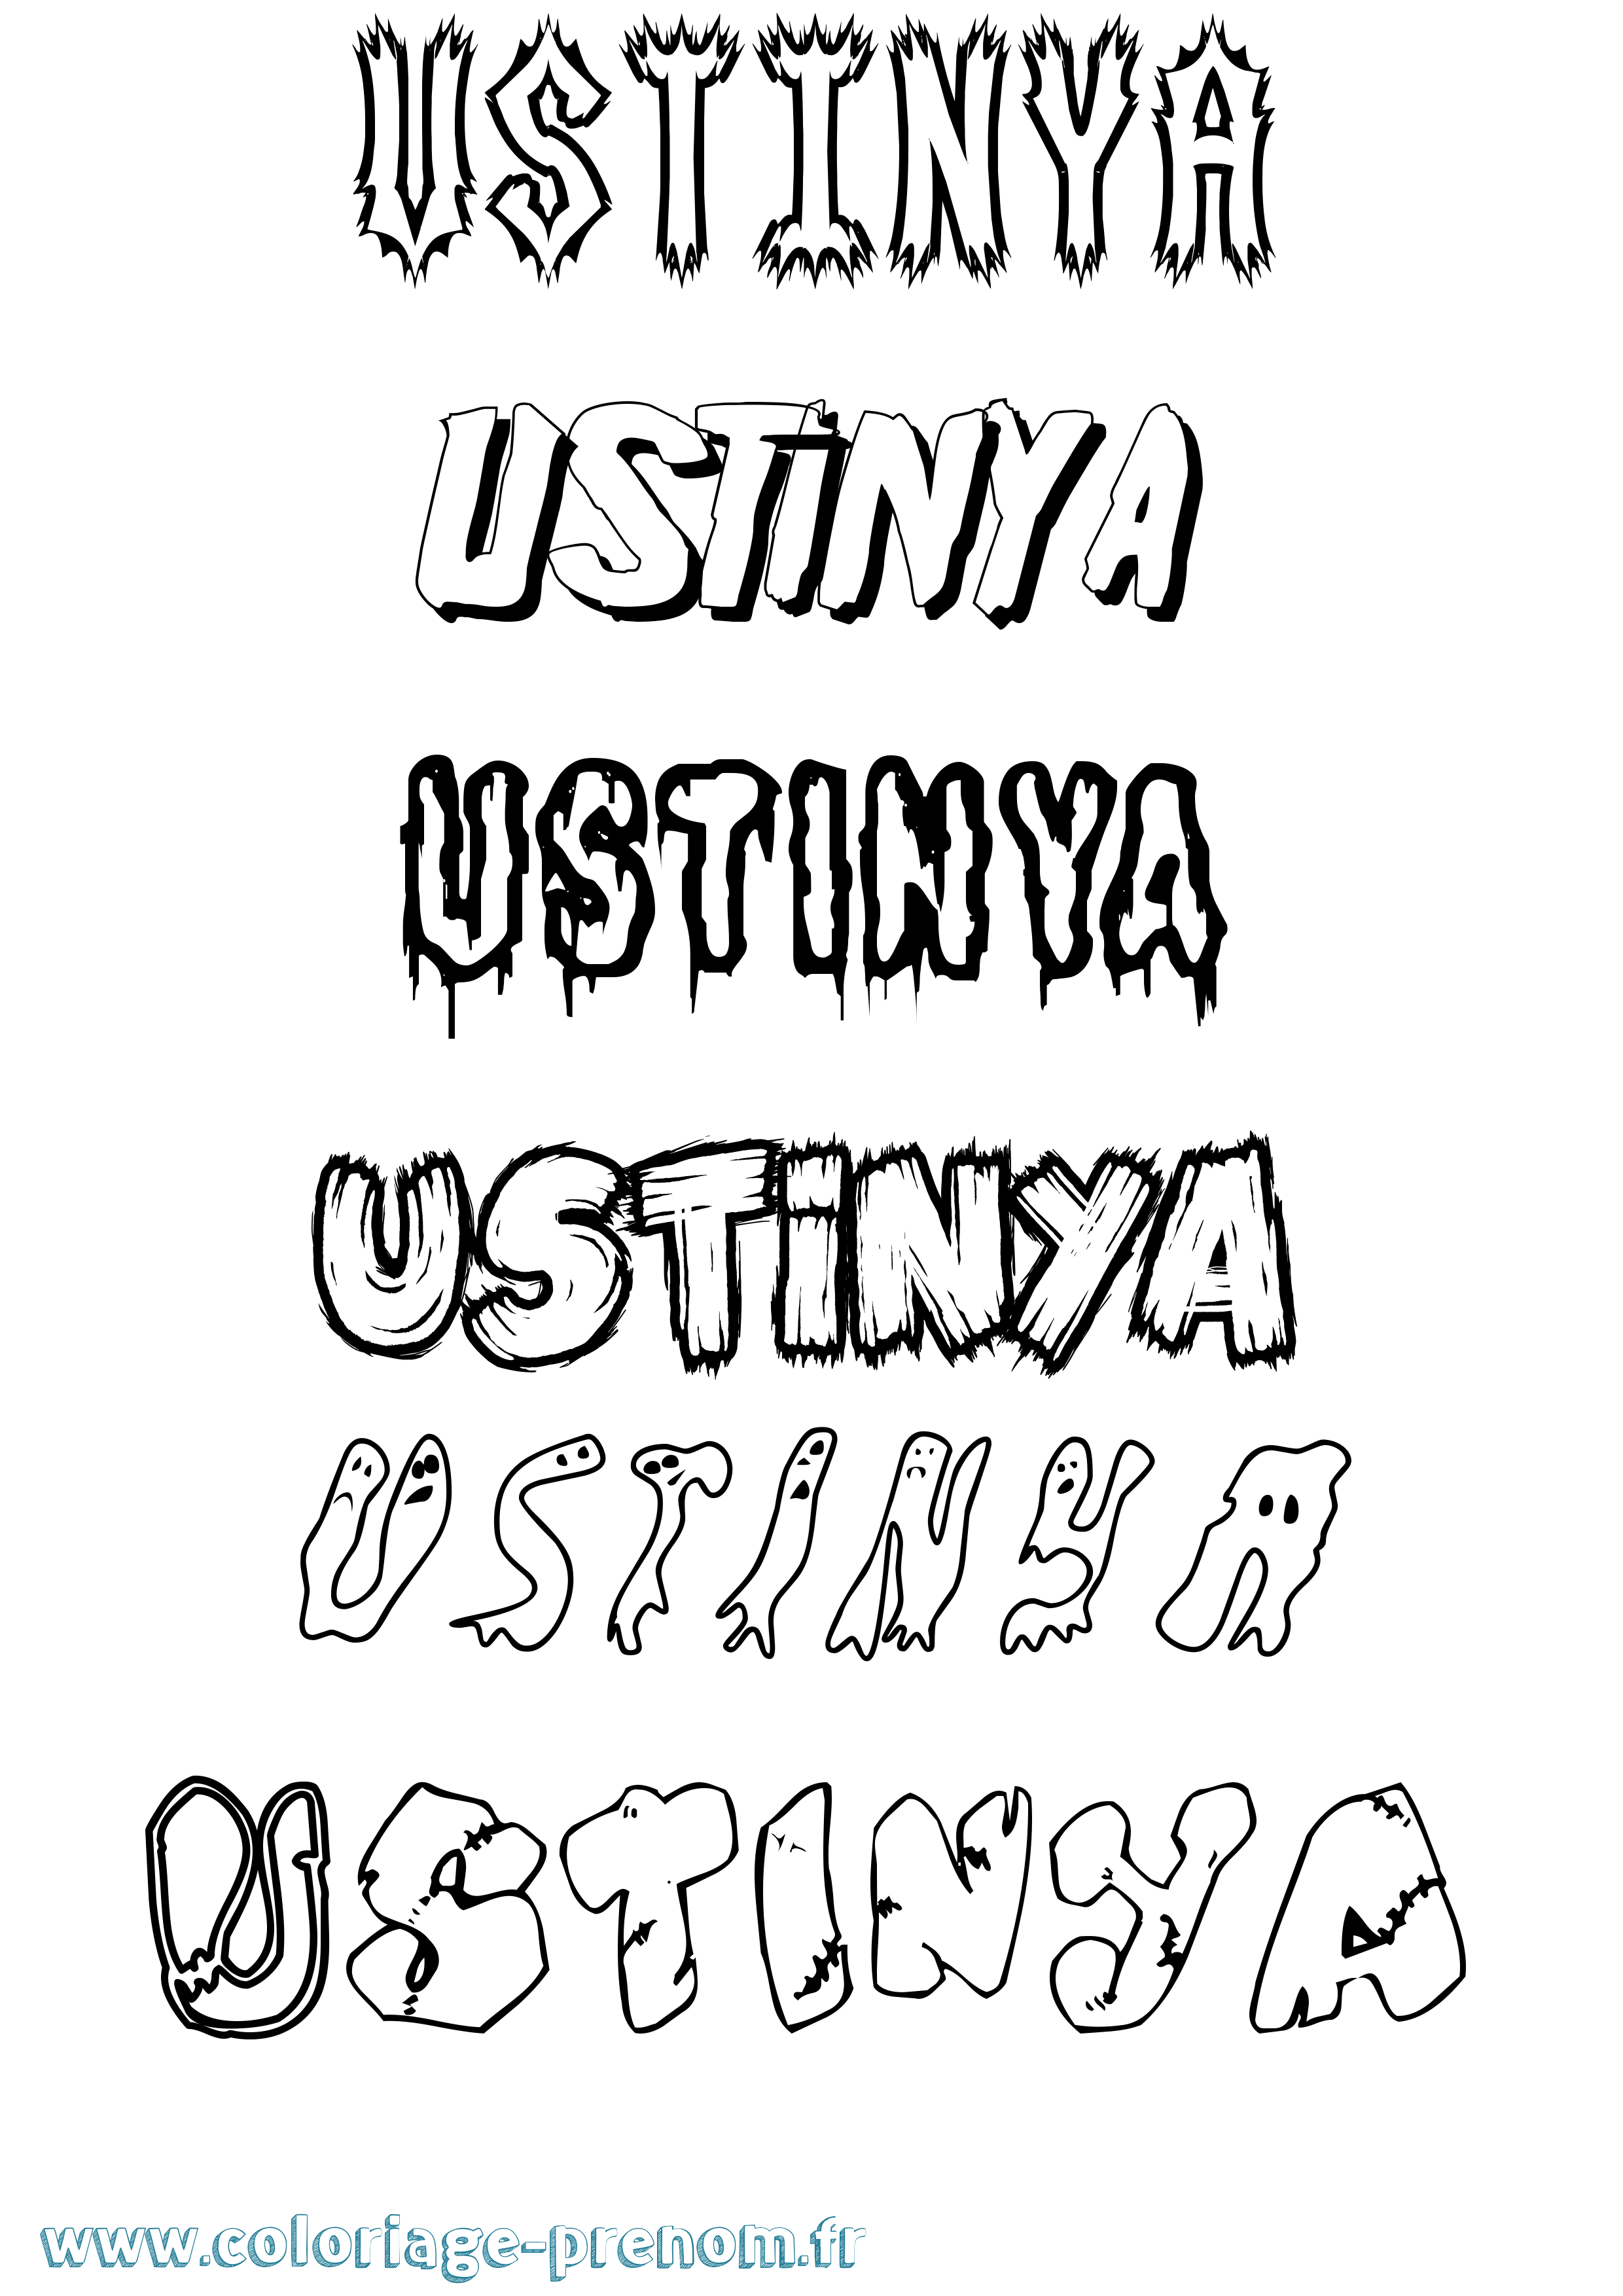 Coloriage prénom Ustinya Frisson